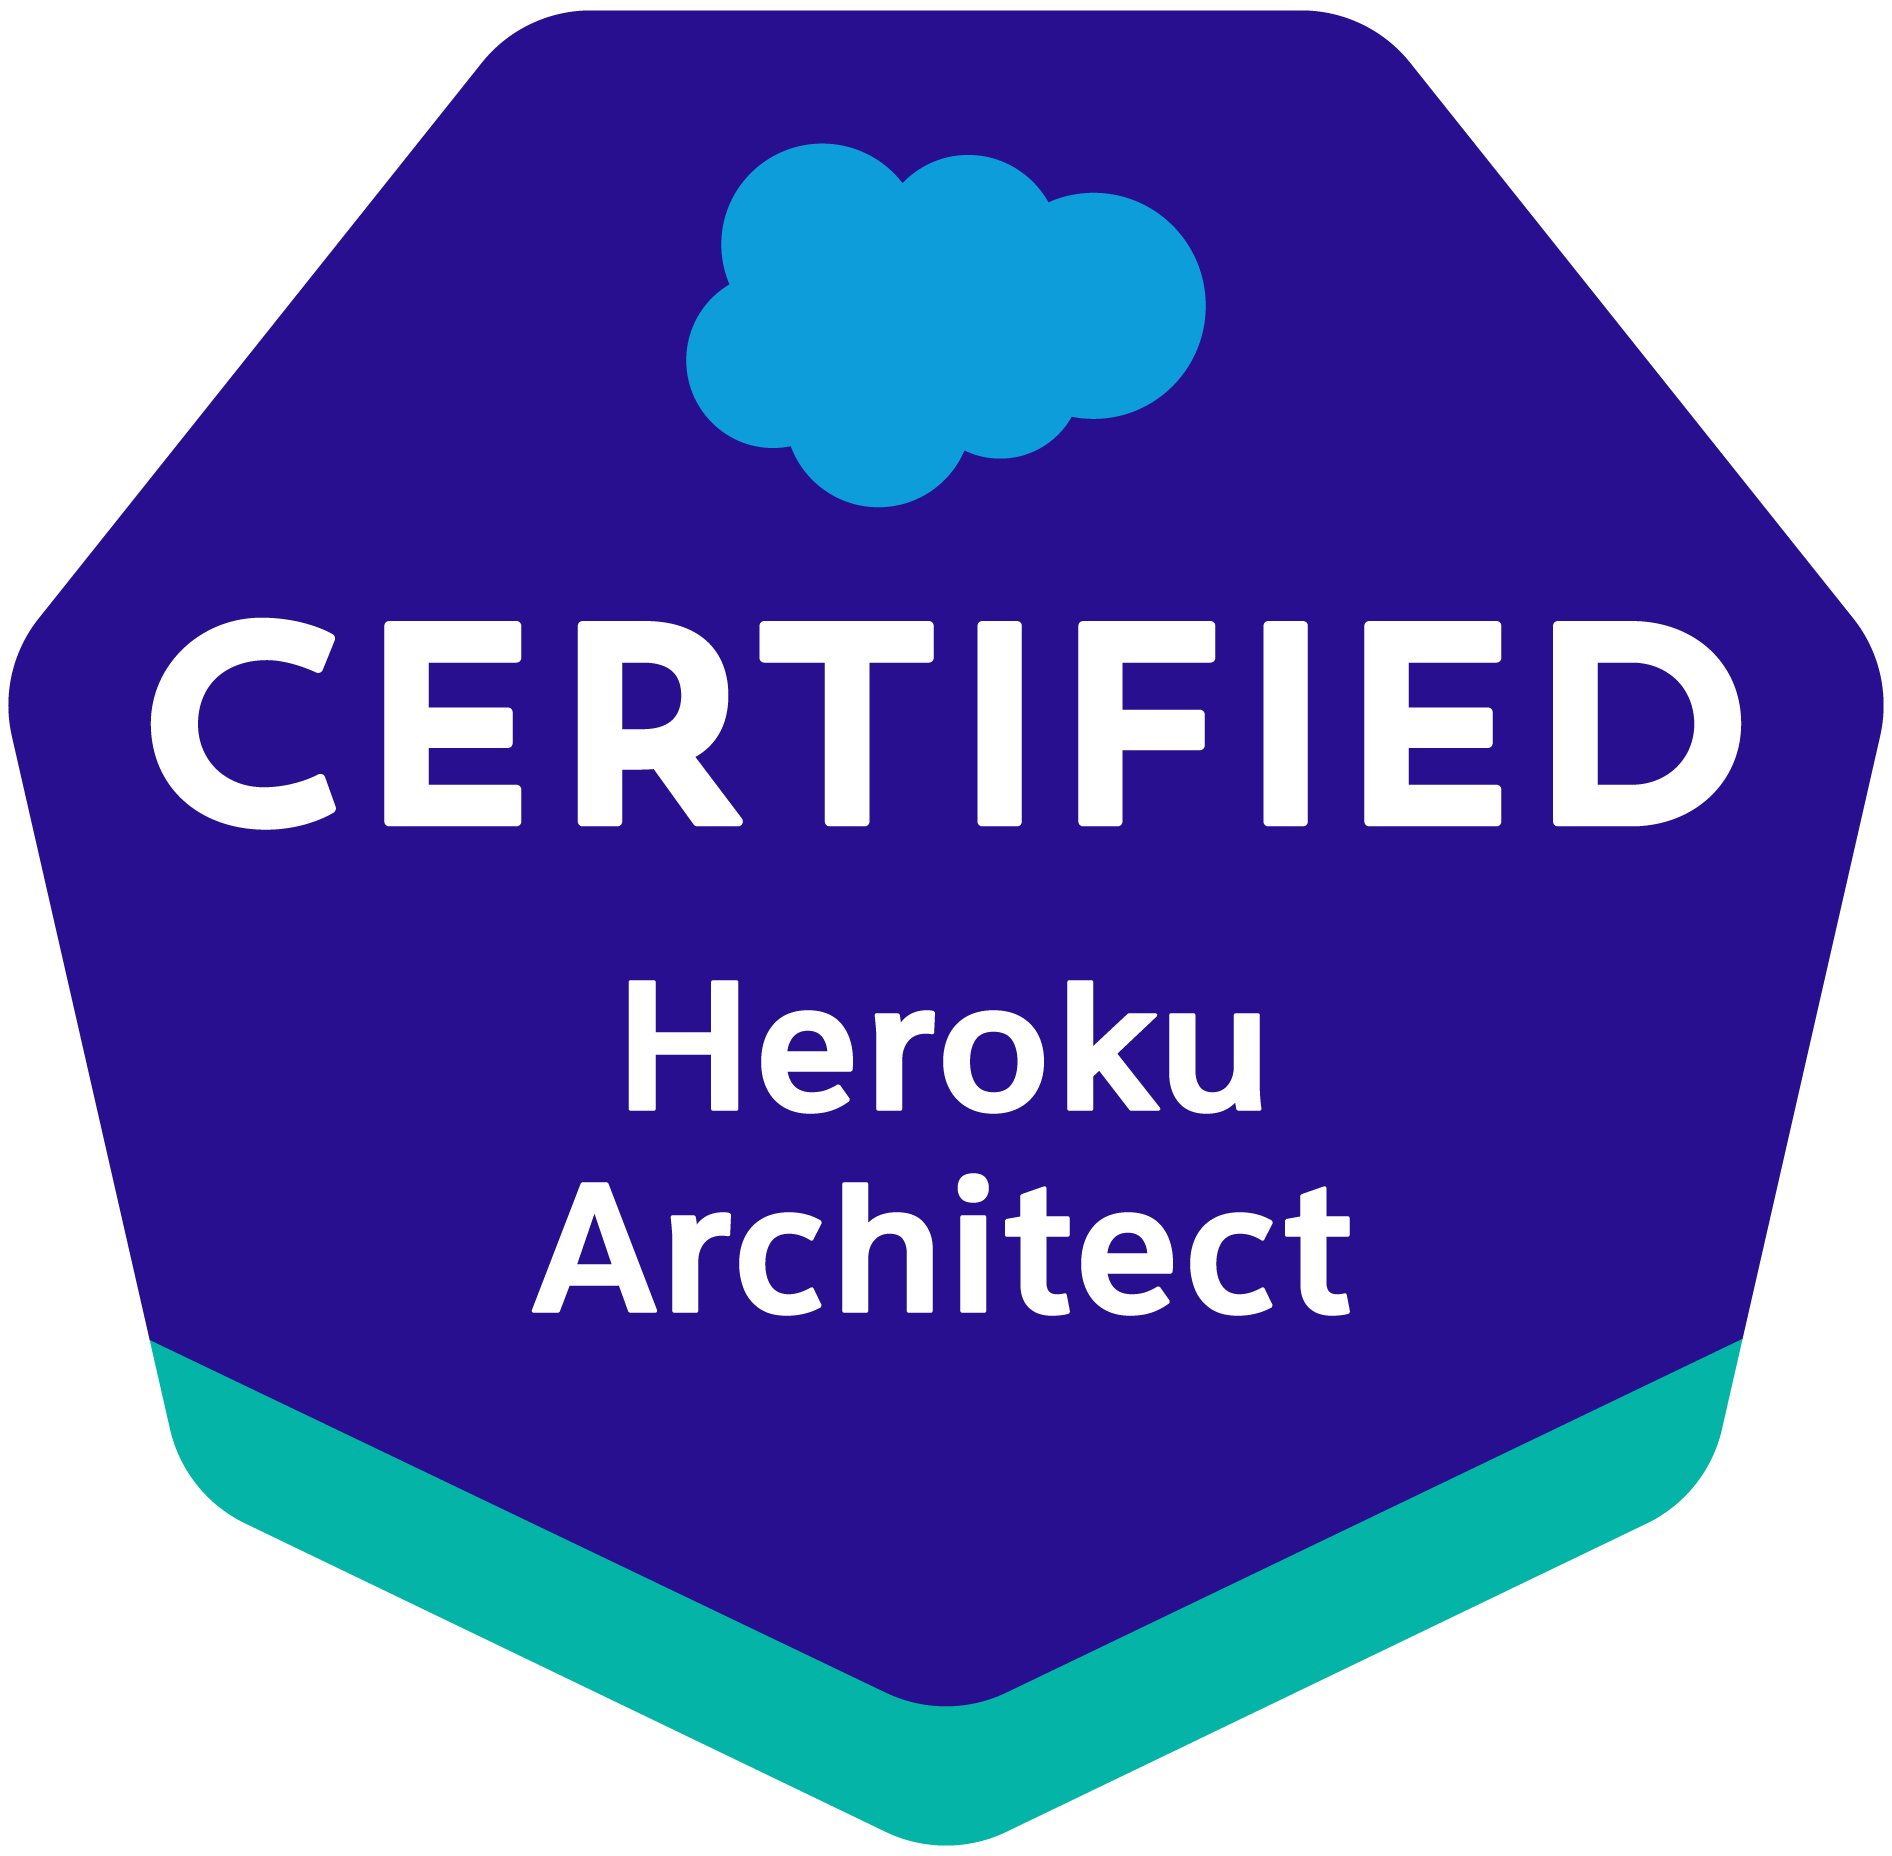 Heroku Architect